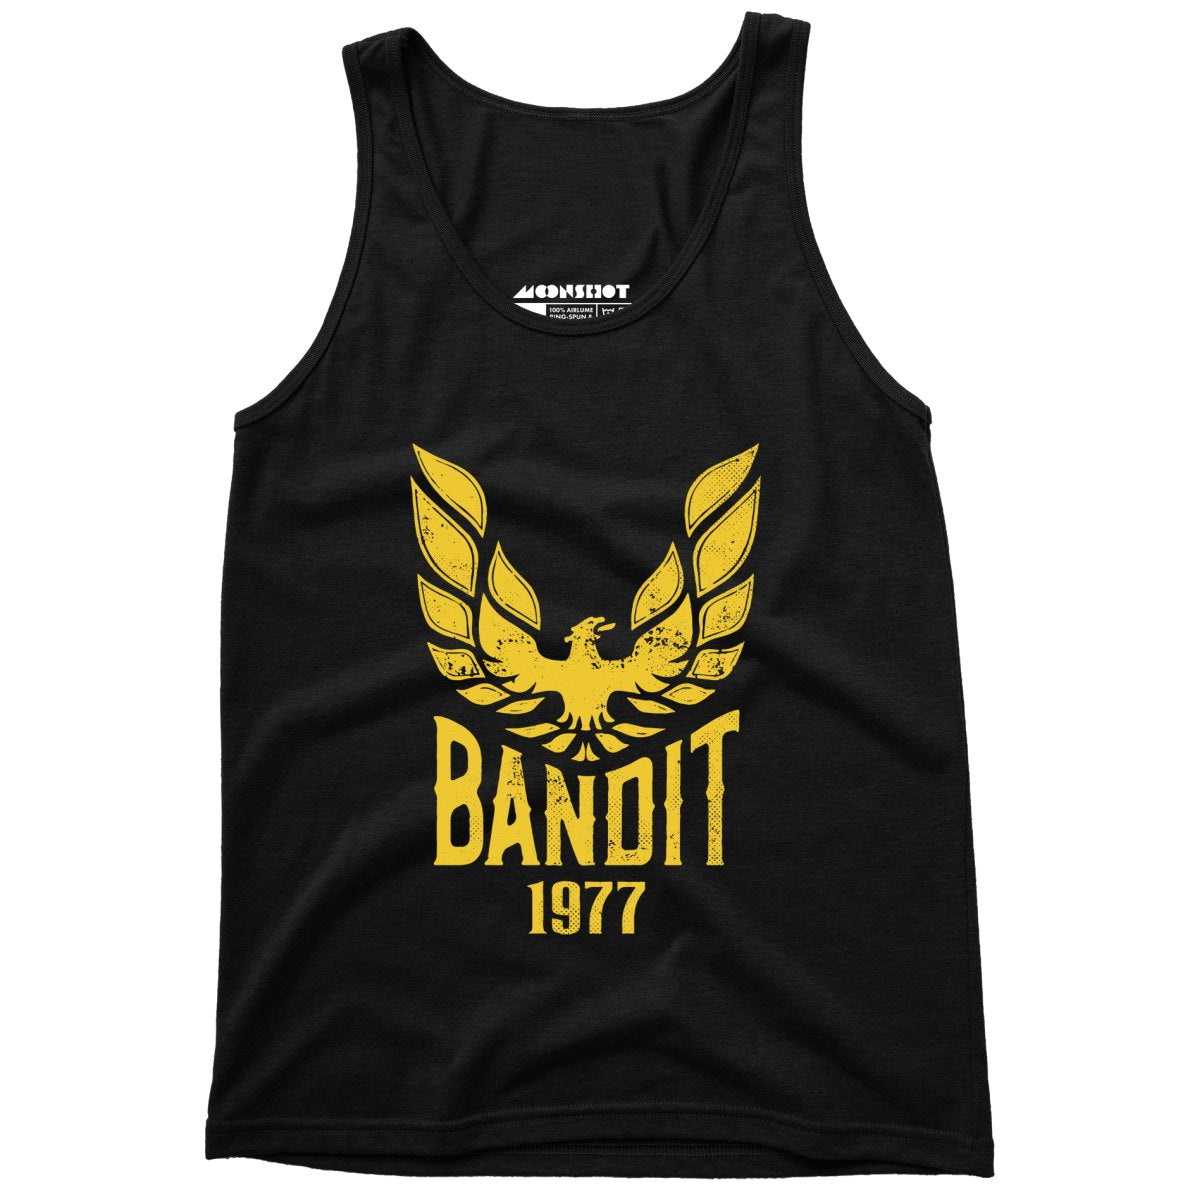 Bandit 1977 - Unisex Tank Top